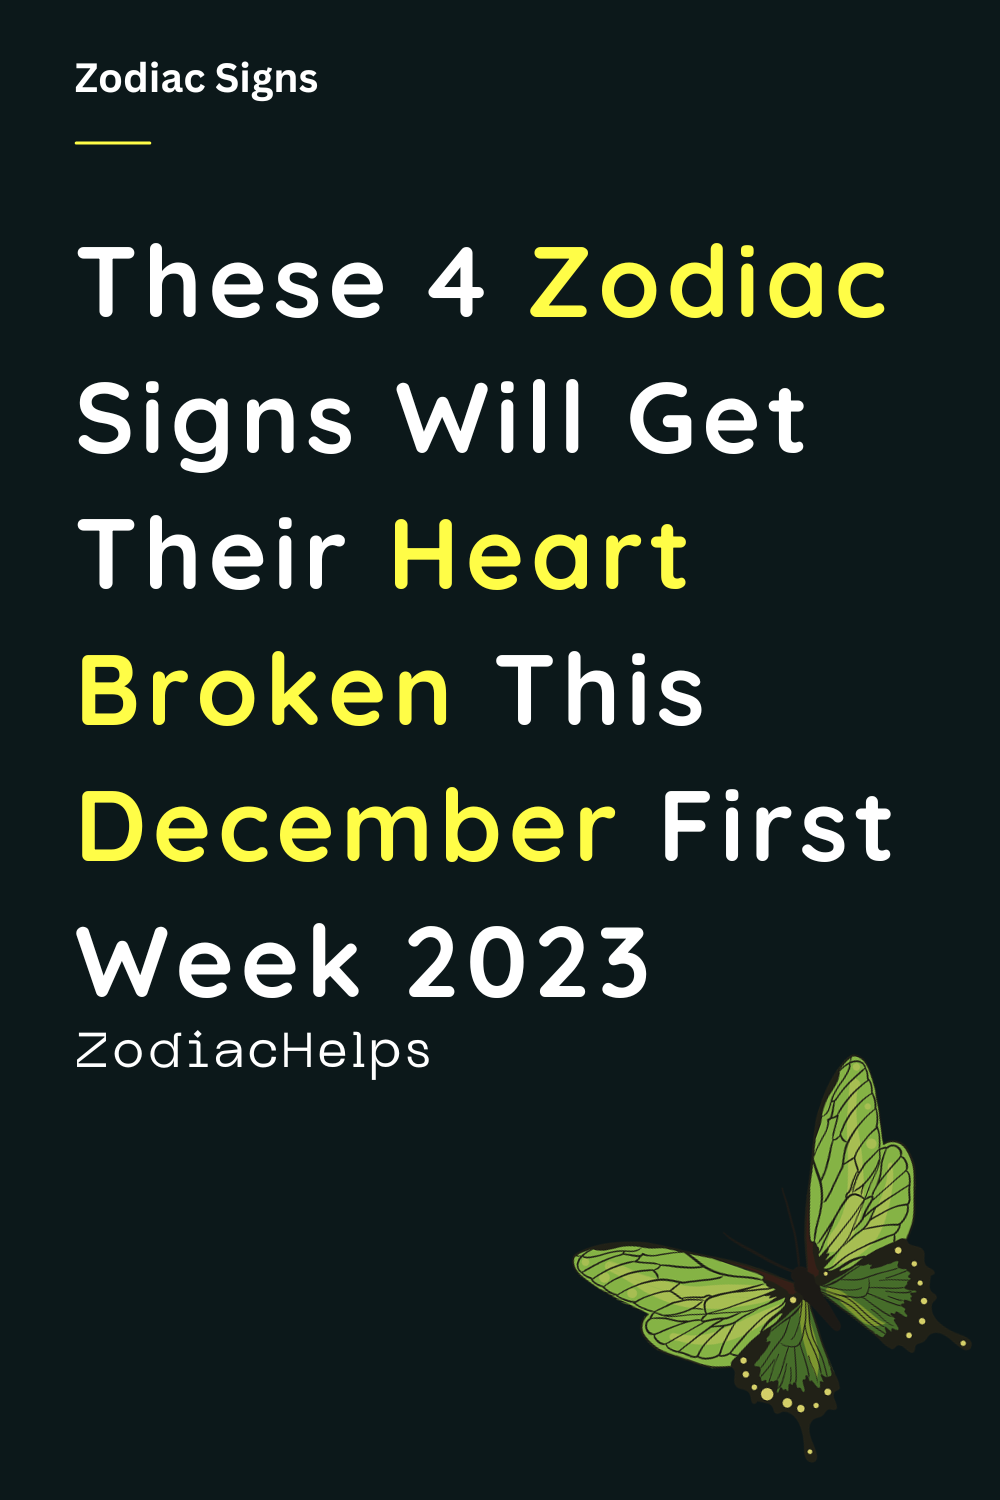 These 4 Zodiac Signs Will Get Their Heart Broken This December First Week 2023